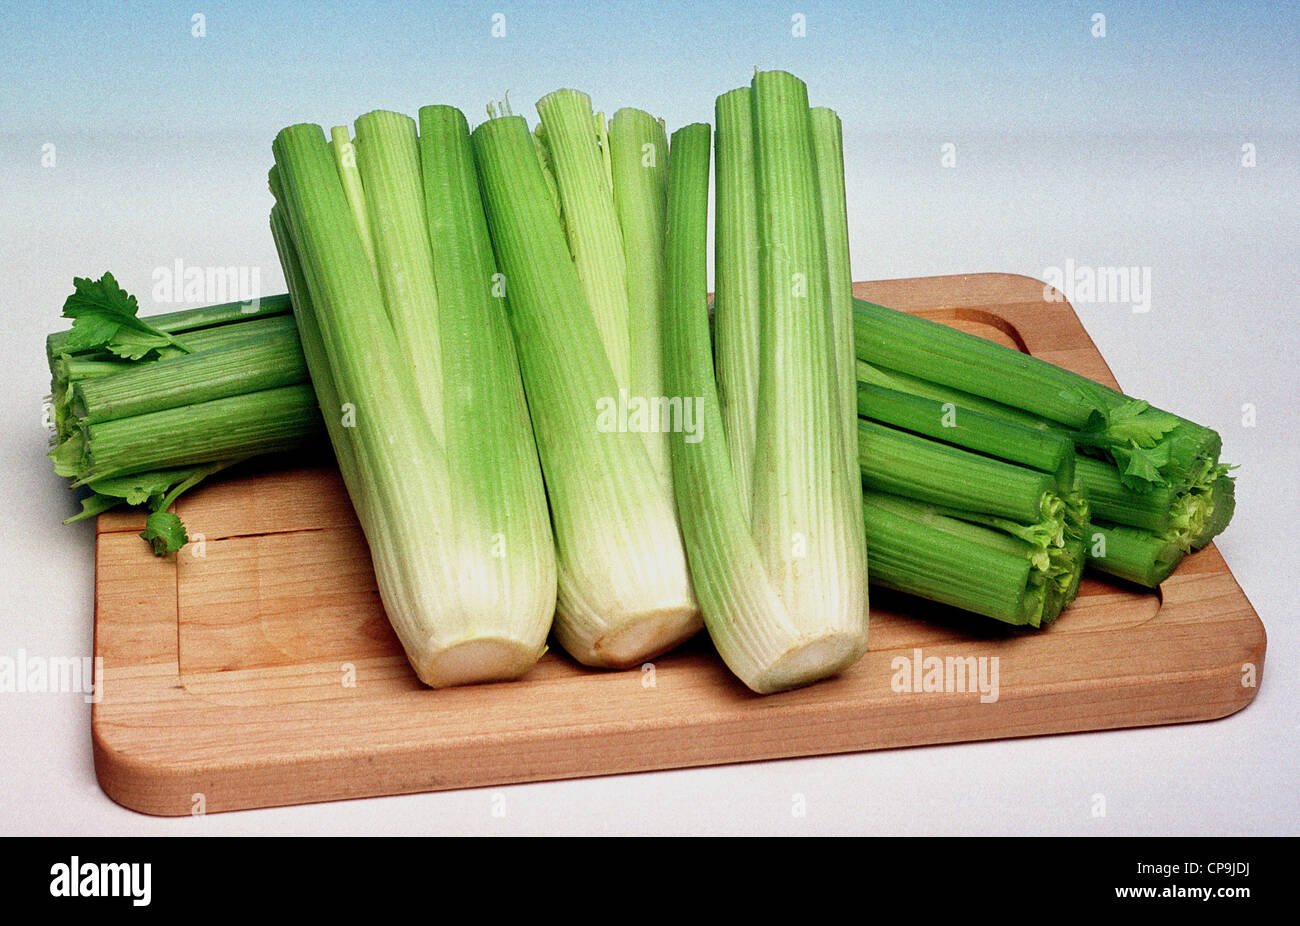 Organic salad vegetables - celery Stock Photo